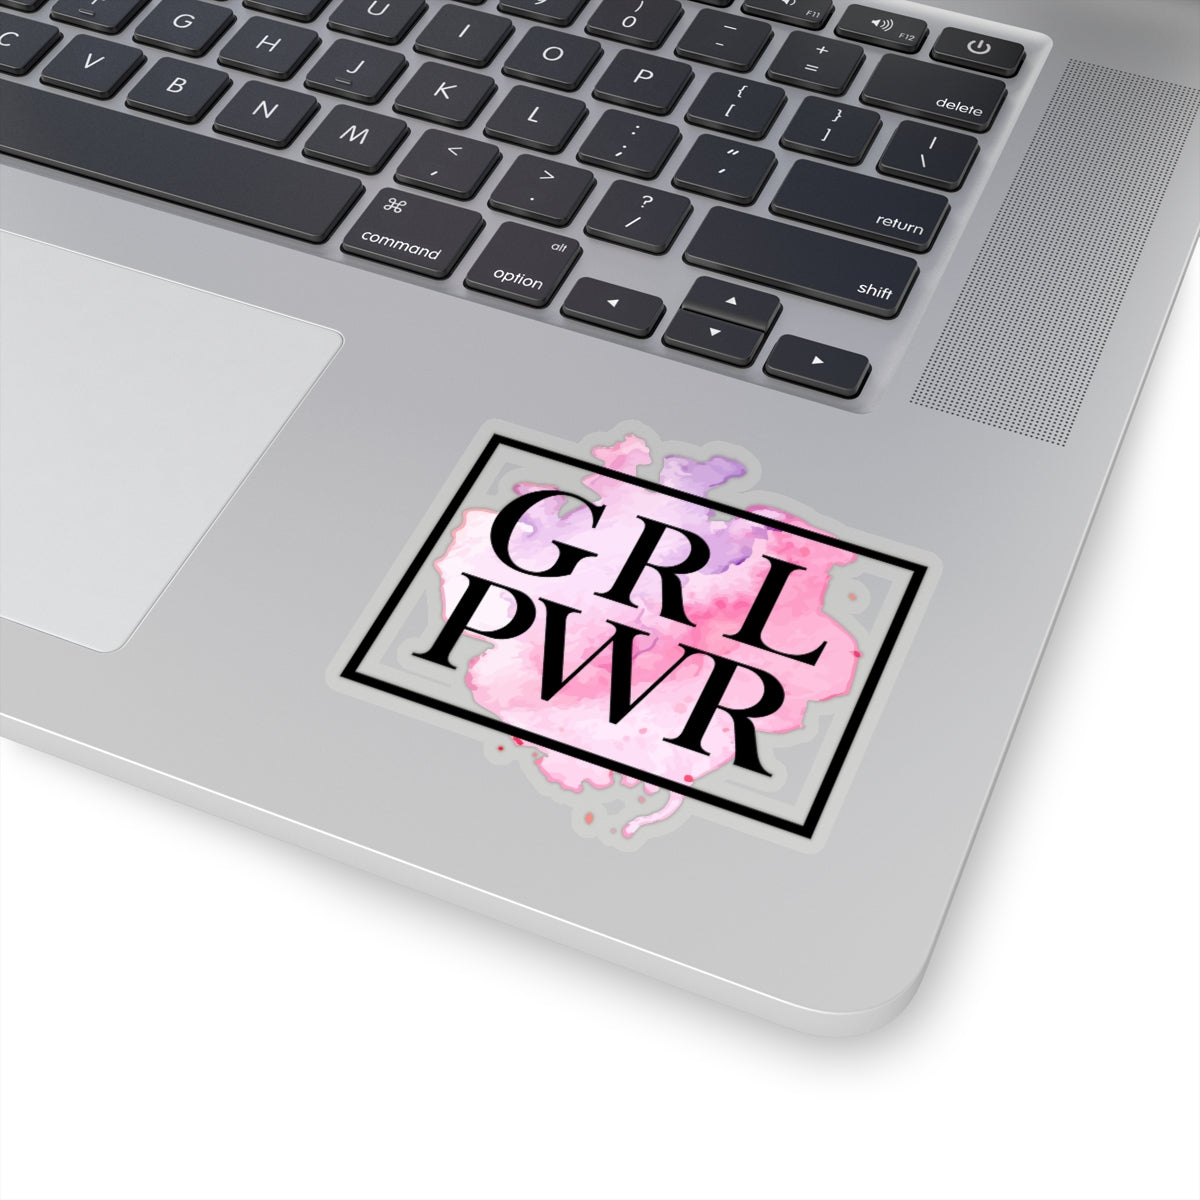 GRL PWR Sticker